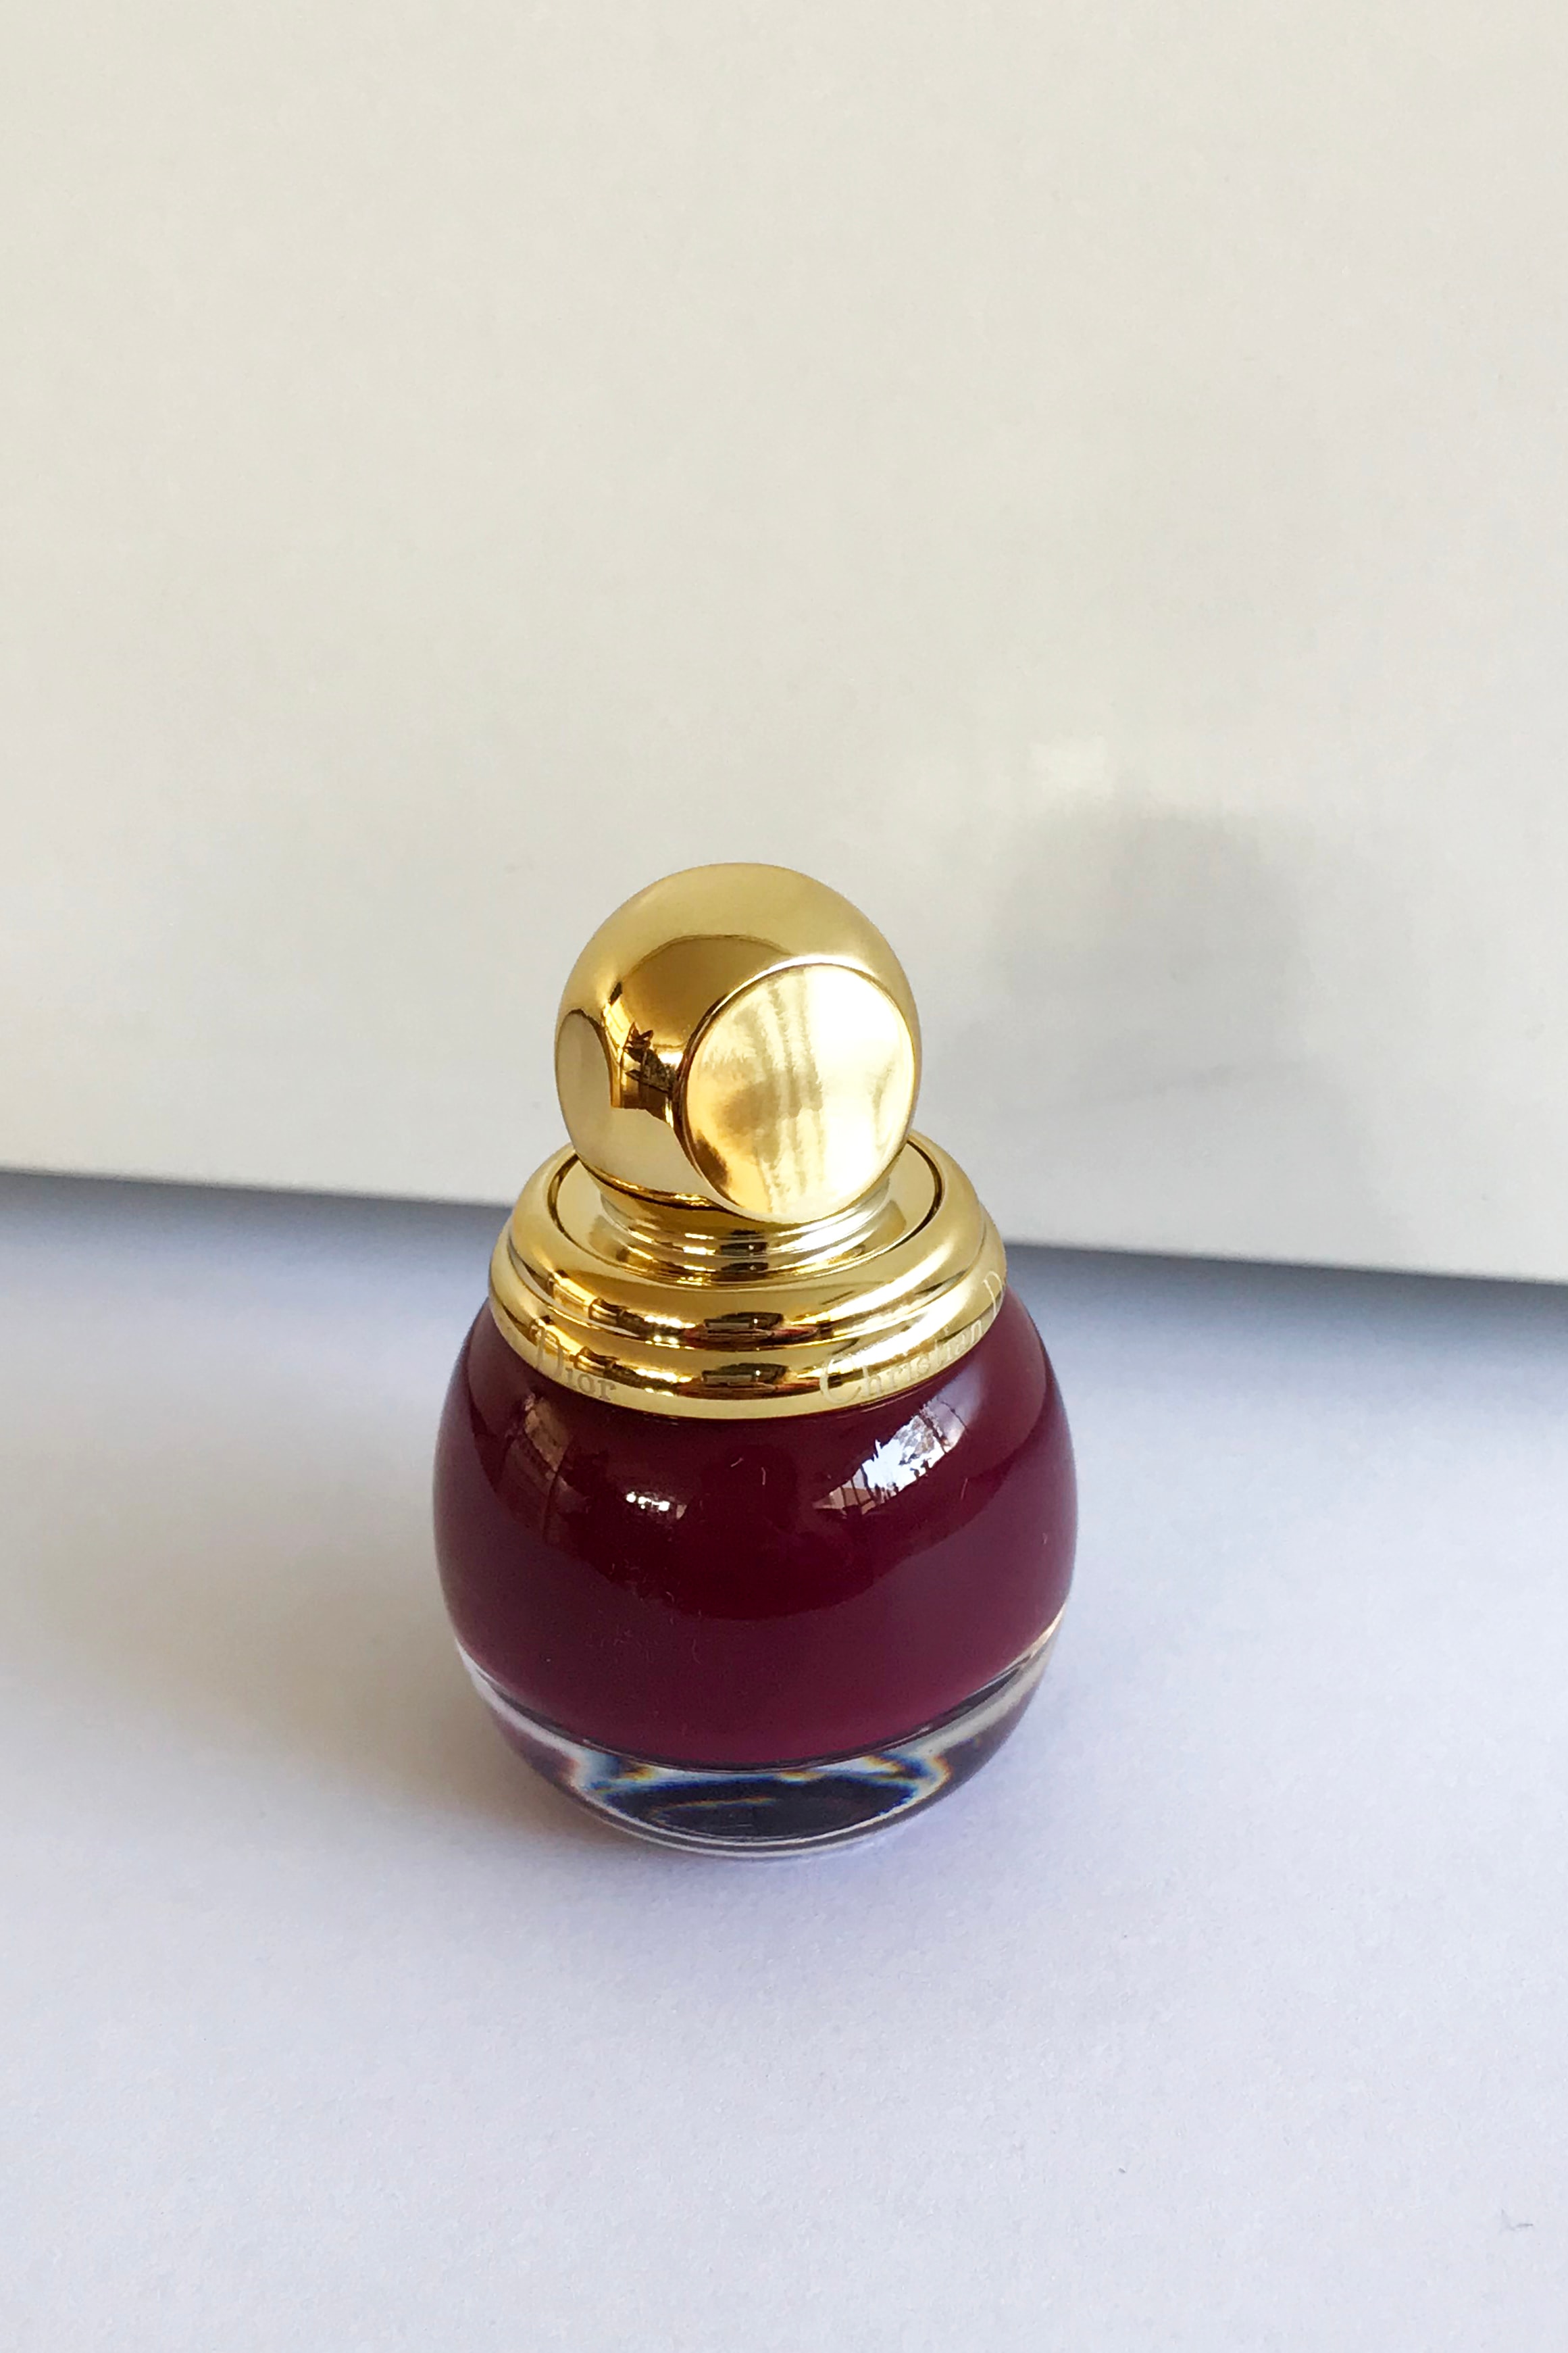 Dior Makeup Holiday Beauty Collection Review Lipstick Nail Polish Highlighter Blush 